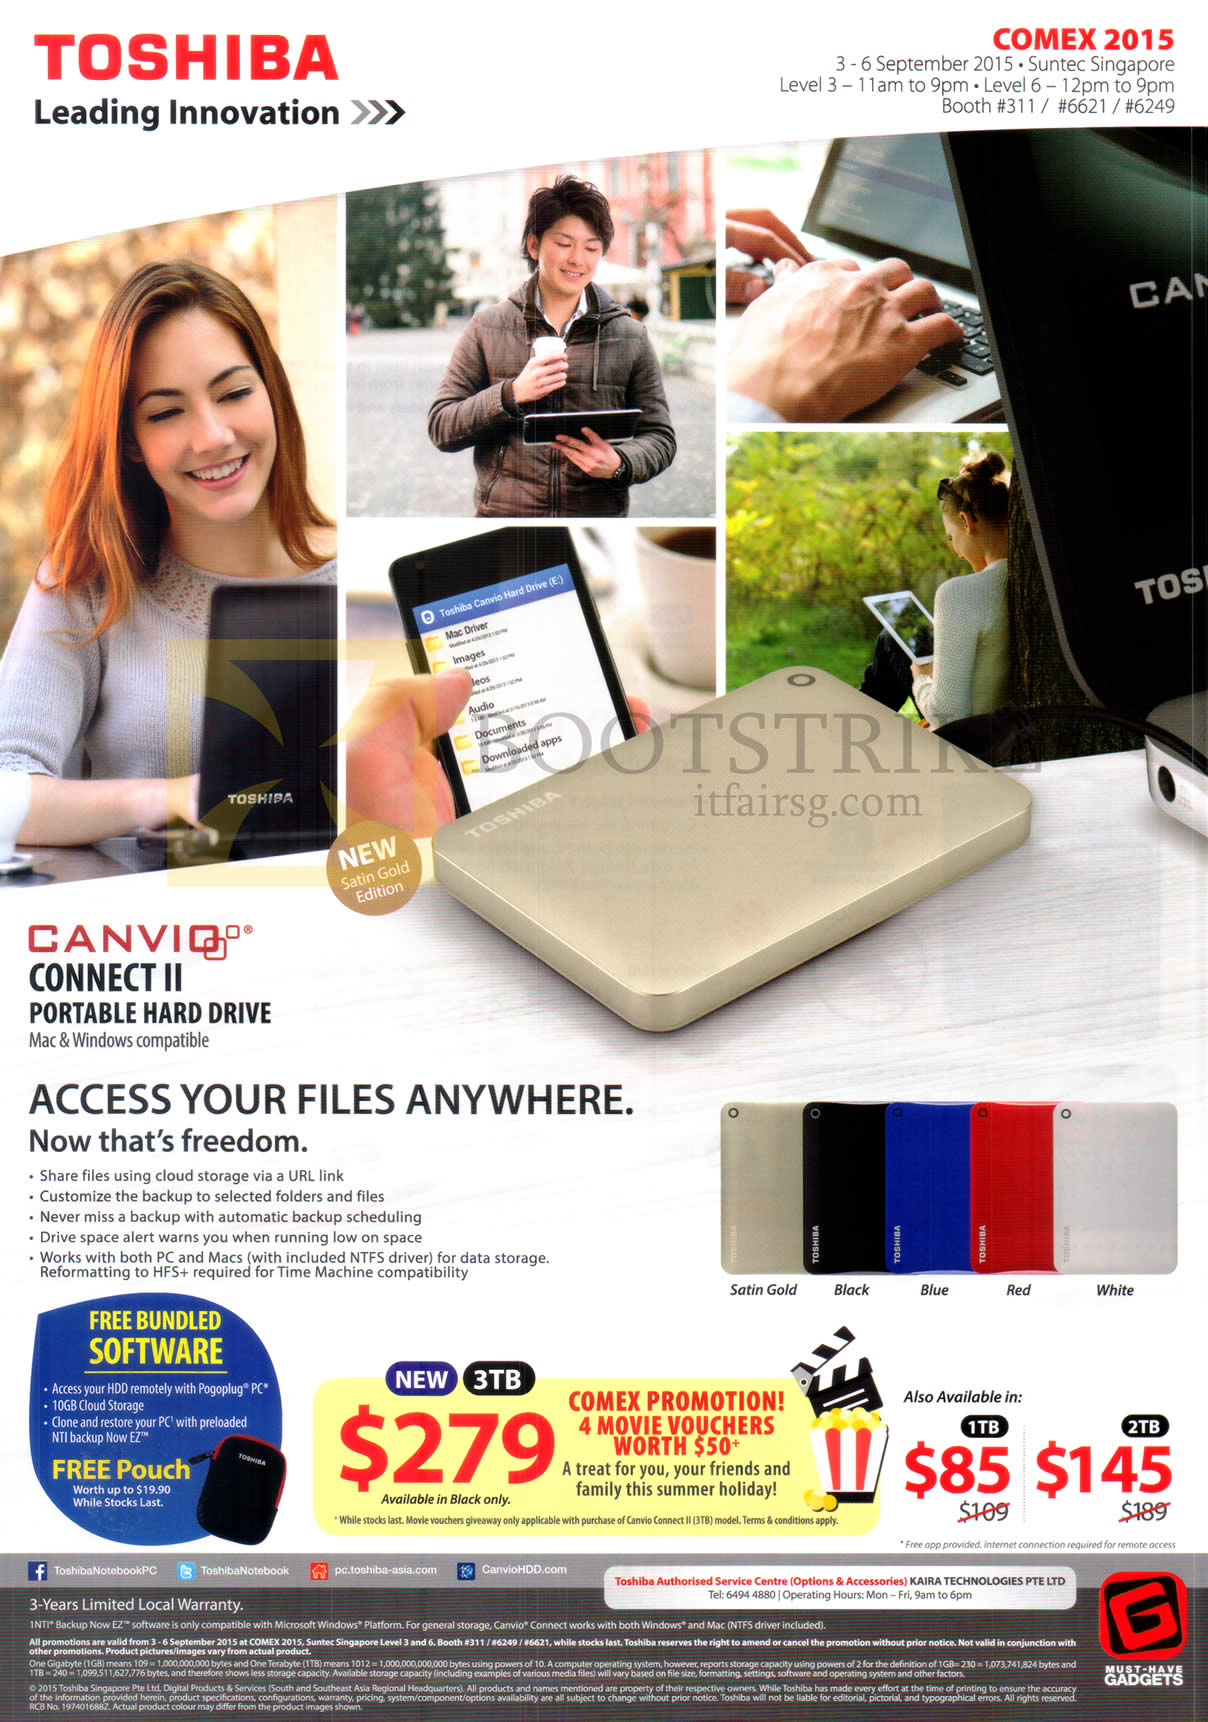 COMEX 2015 price list image brochure of Toshiba External Storage Drive Canvio Connect II, 1TB 2TB 3TB